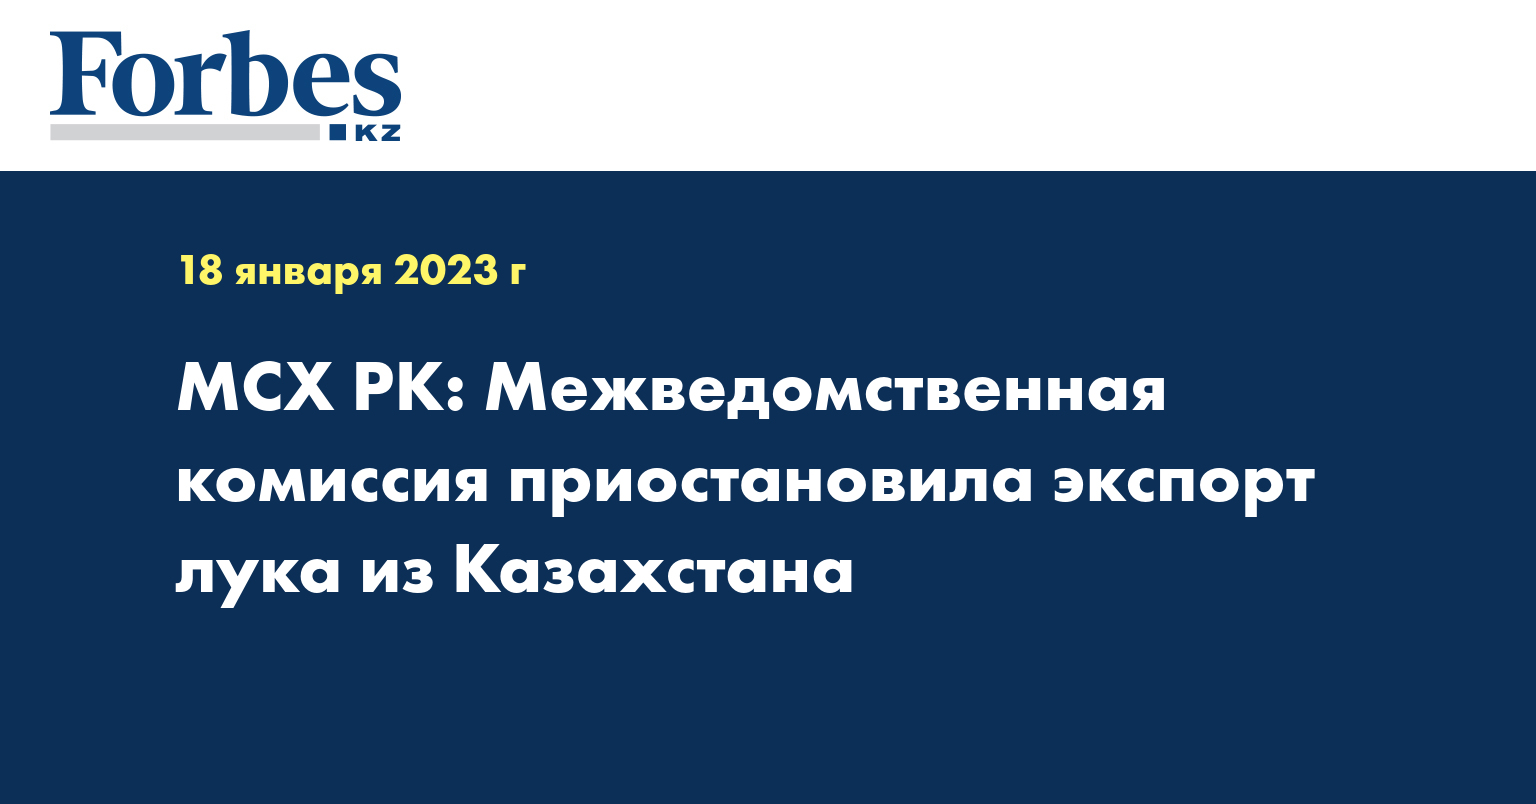 МСХ РК: Межведомственная комиссия приостановила экспорт лука из Казахстана